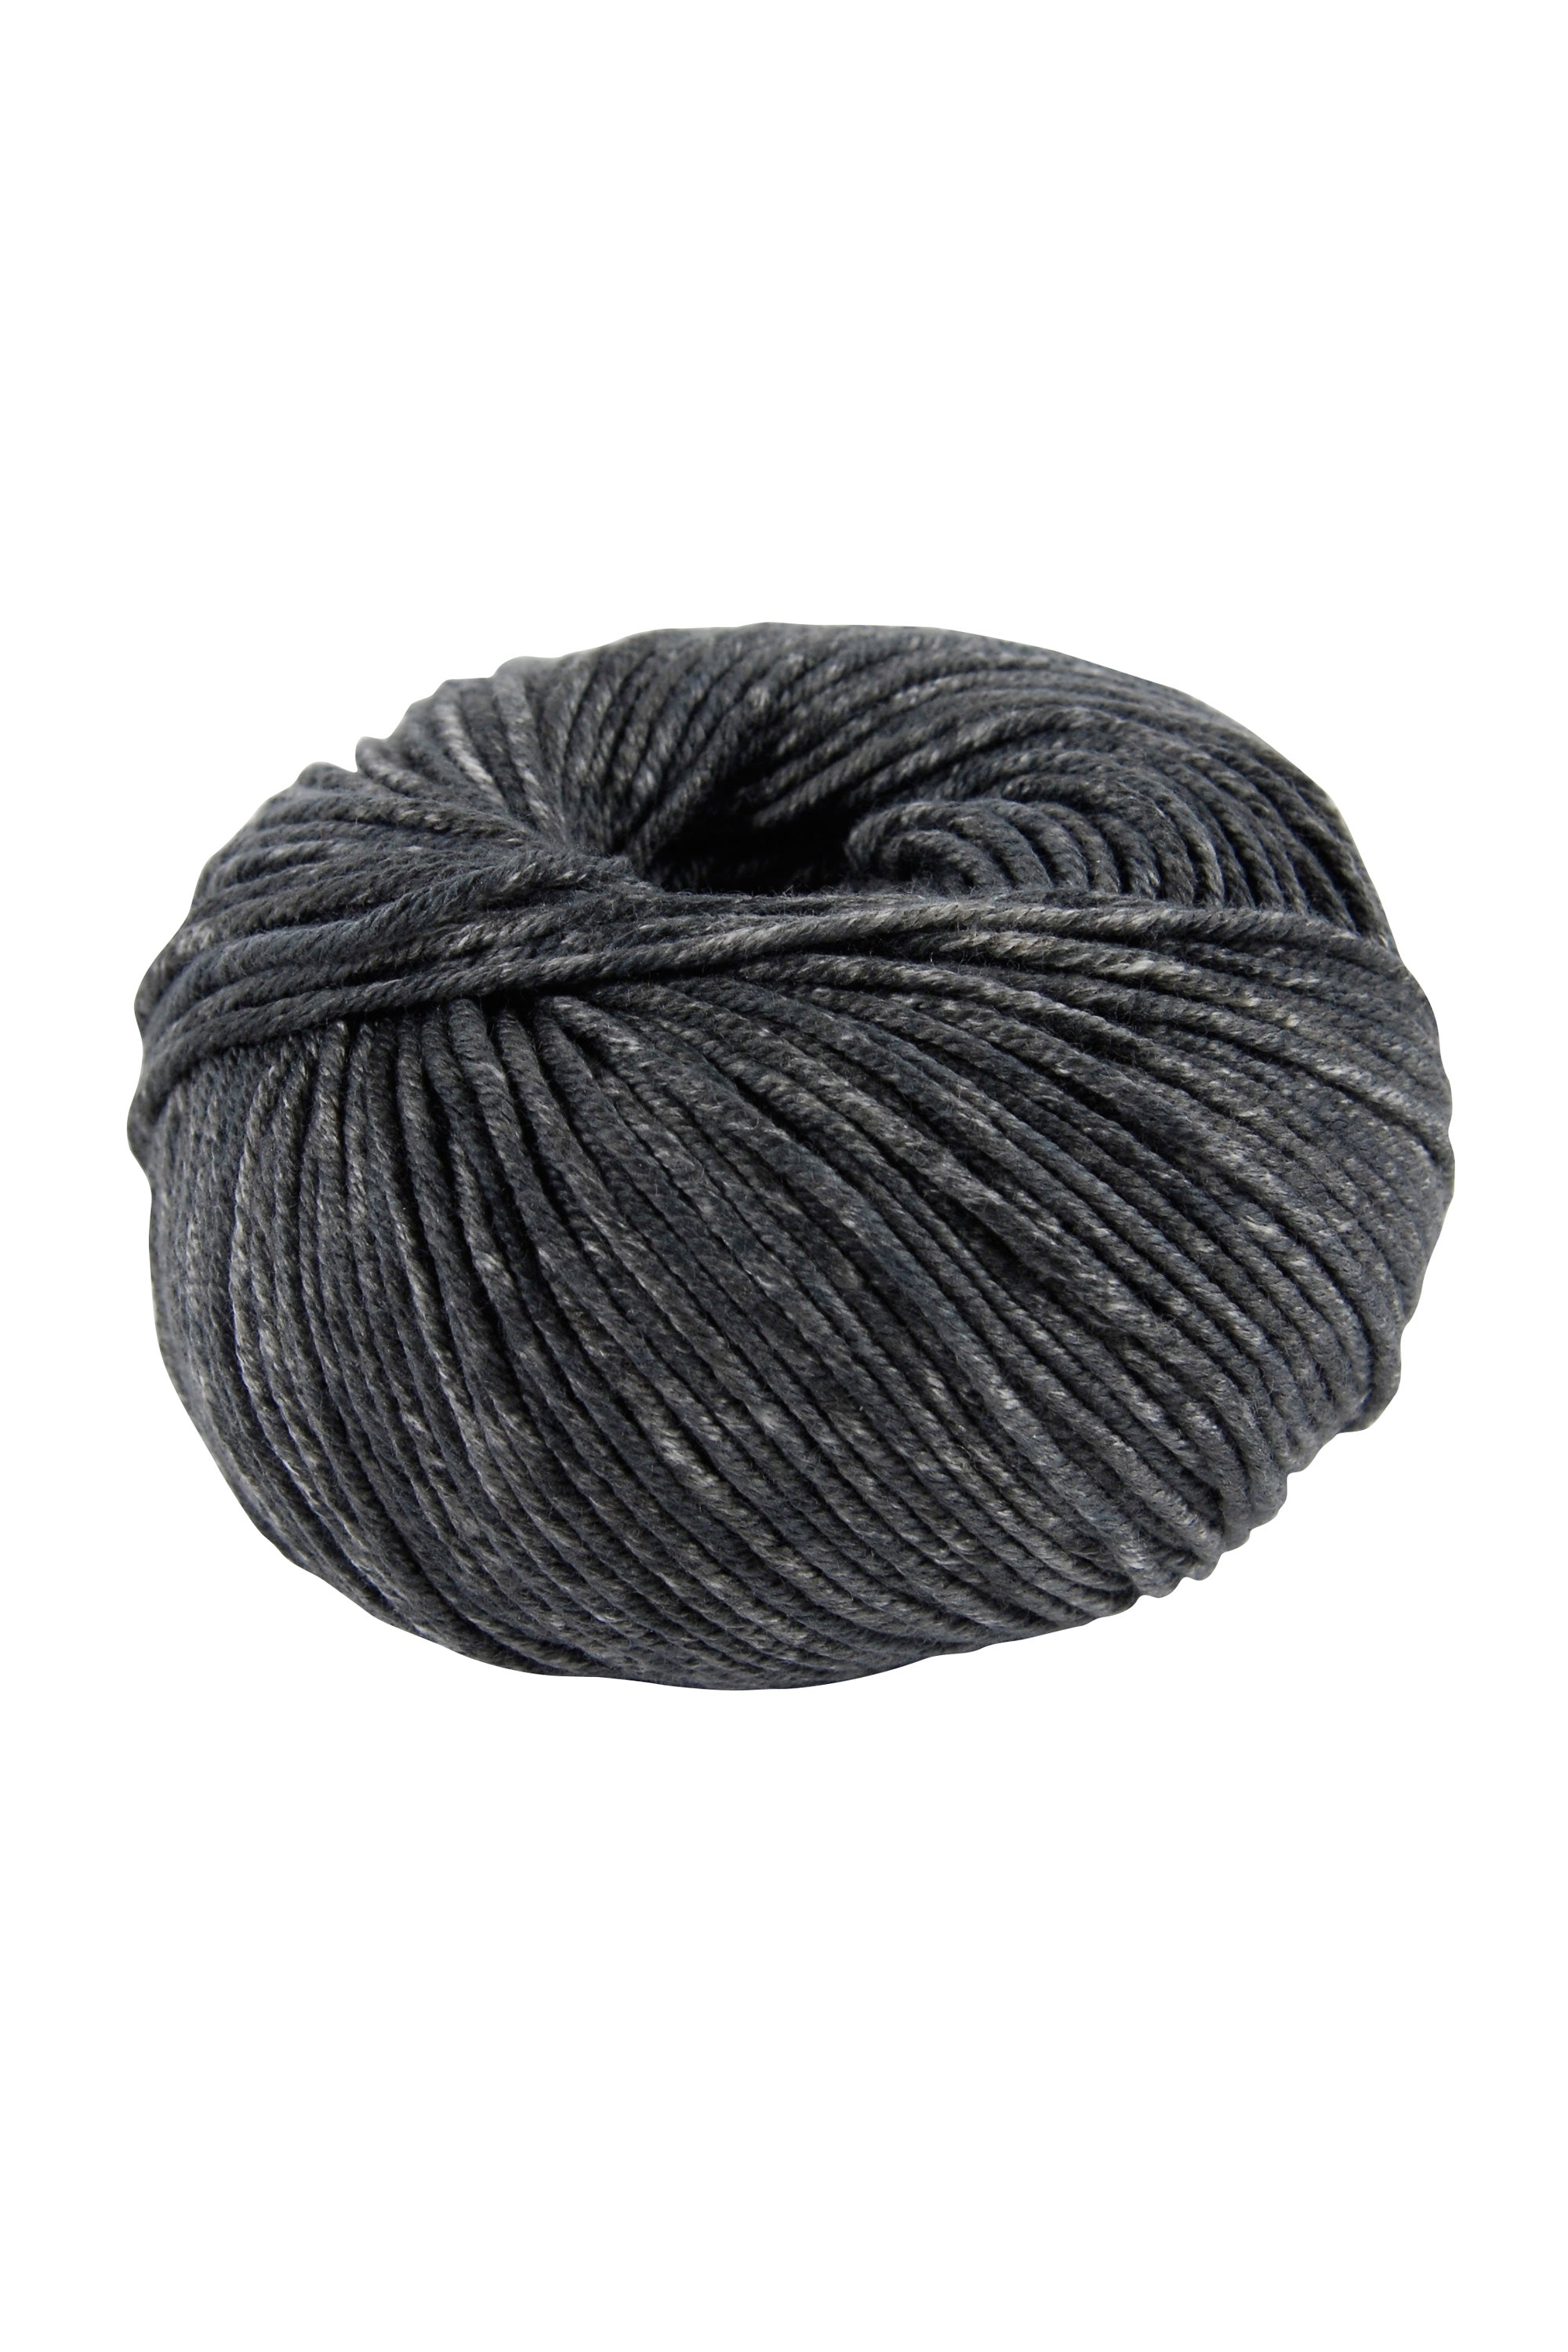 DMC Natura Yarn, 100% Cotton, Canelle N37, 9x9x7 cm